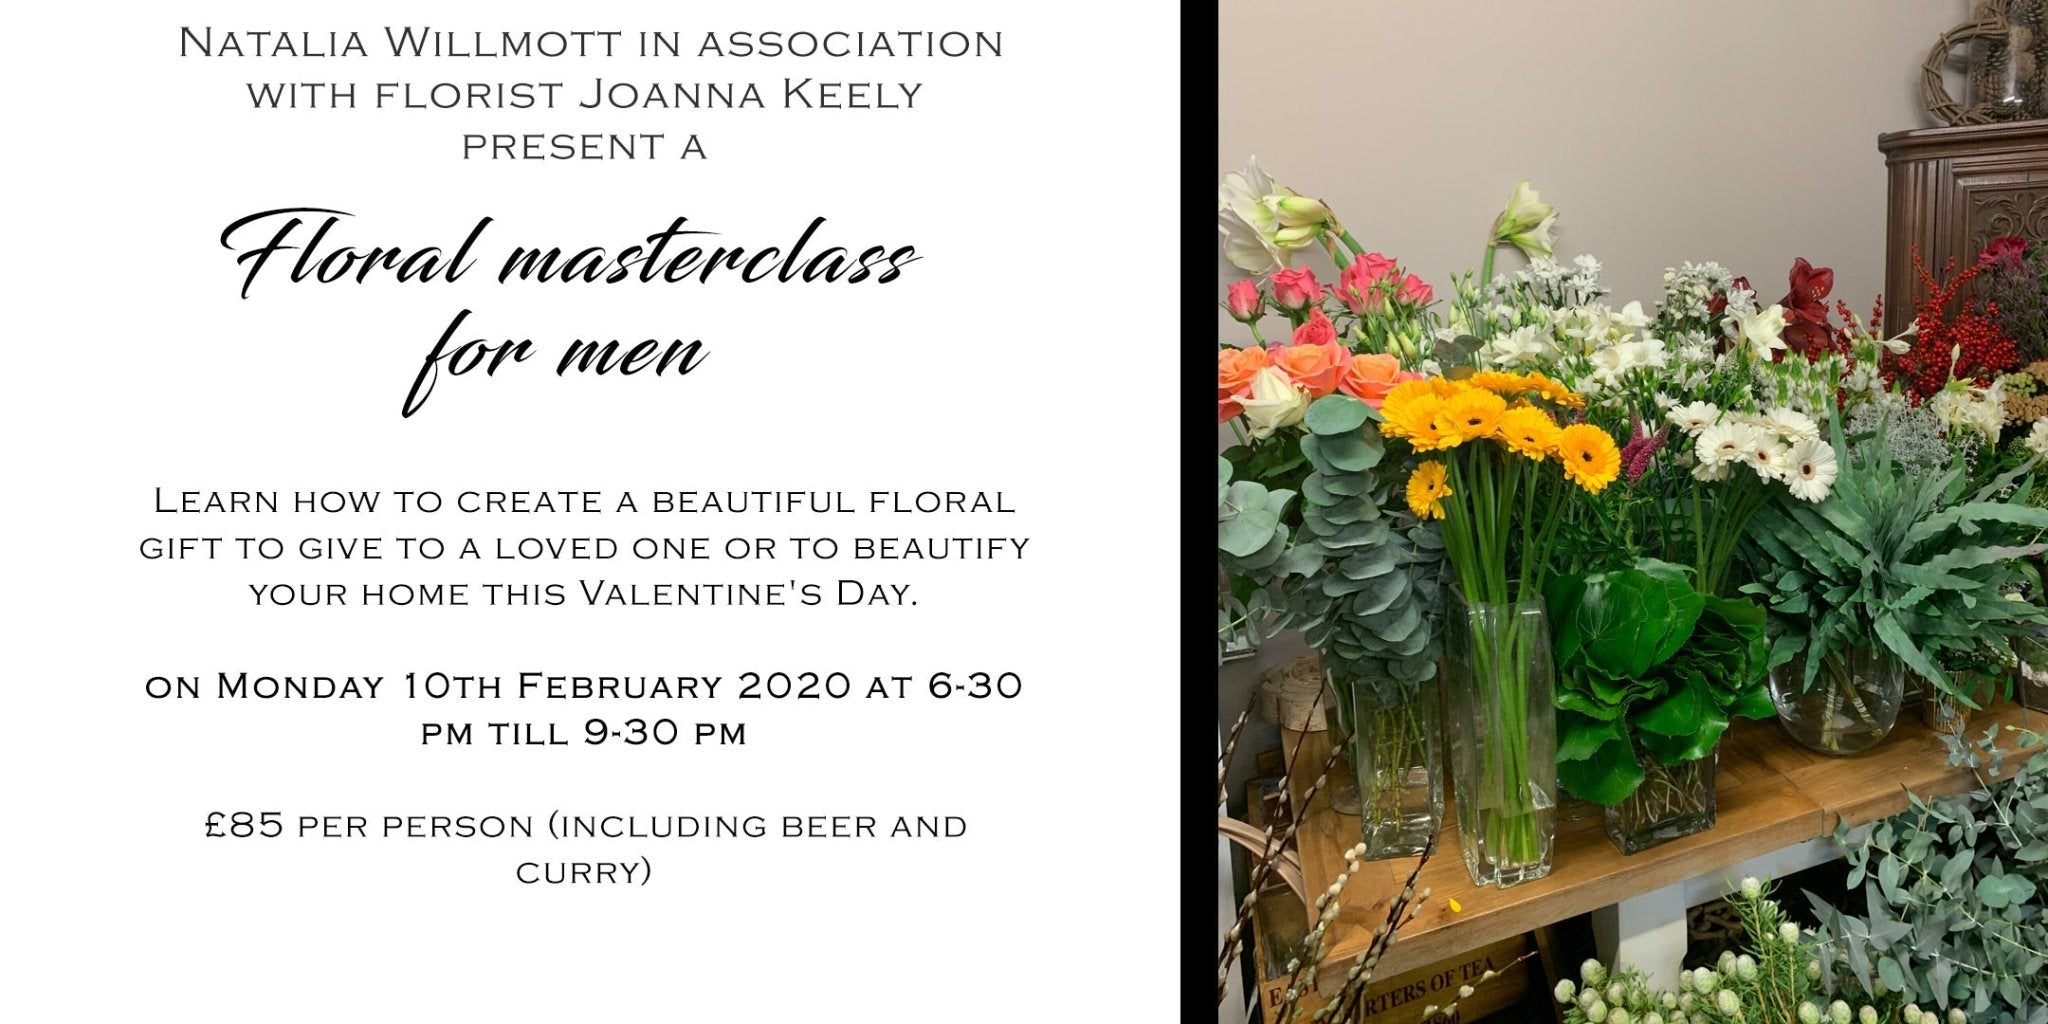 Floral masterclass for men - Natalia Willmott